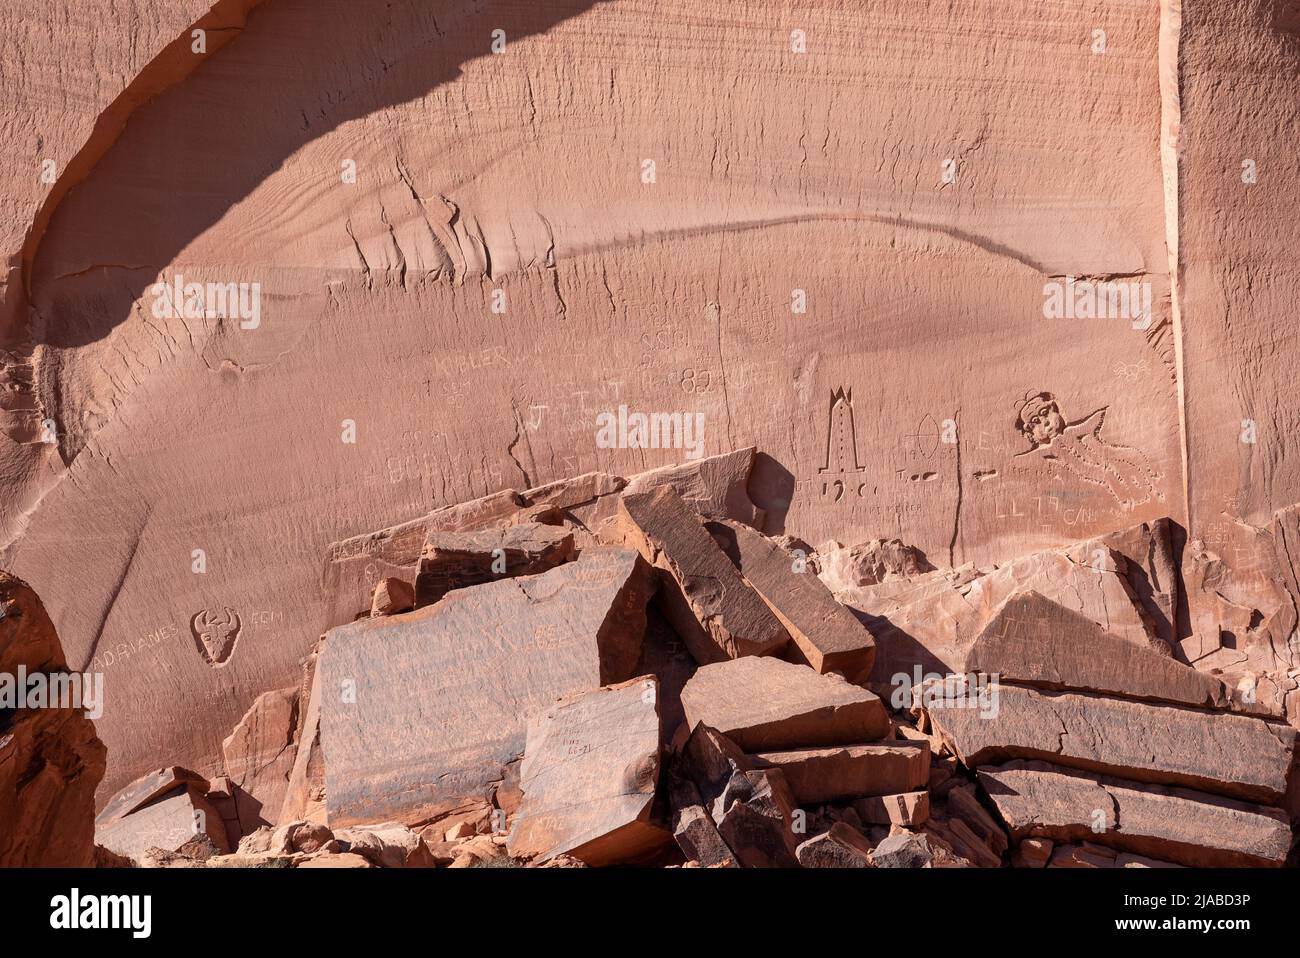 Inscripciones en la pared del cañón, Cañón Labyrinth, Utah. Foto de stock